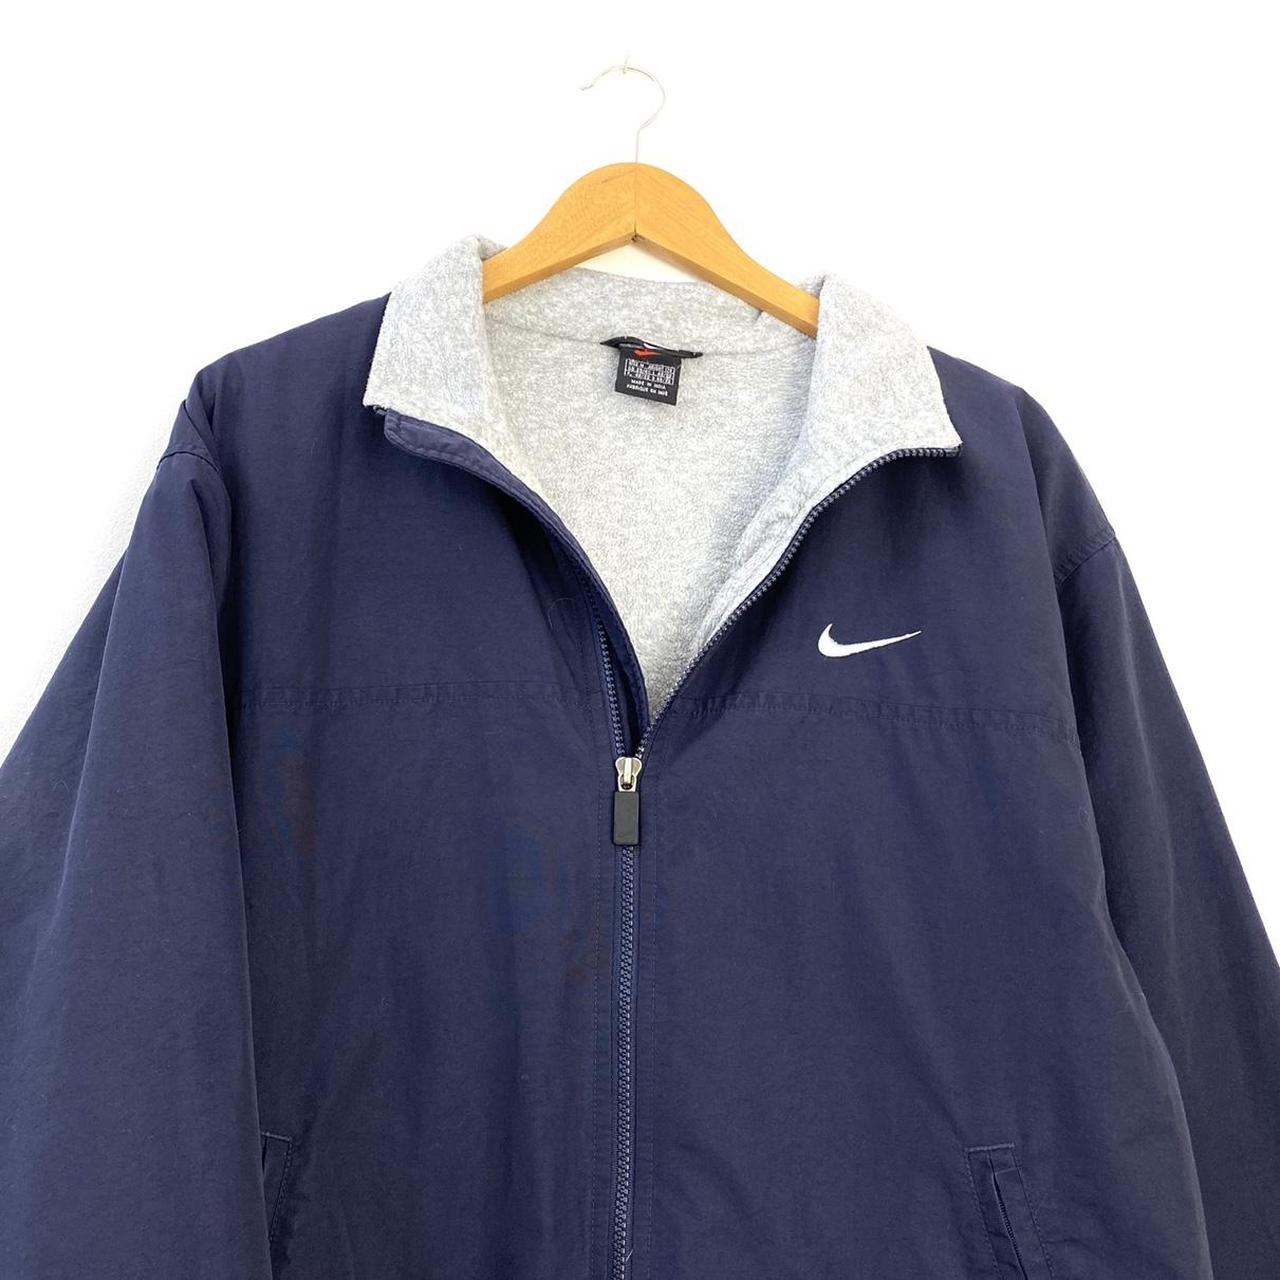 Vintage Nike fleece lined jacket - size medium fits... - Depop